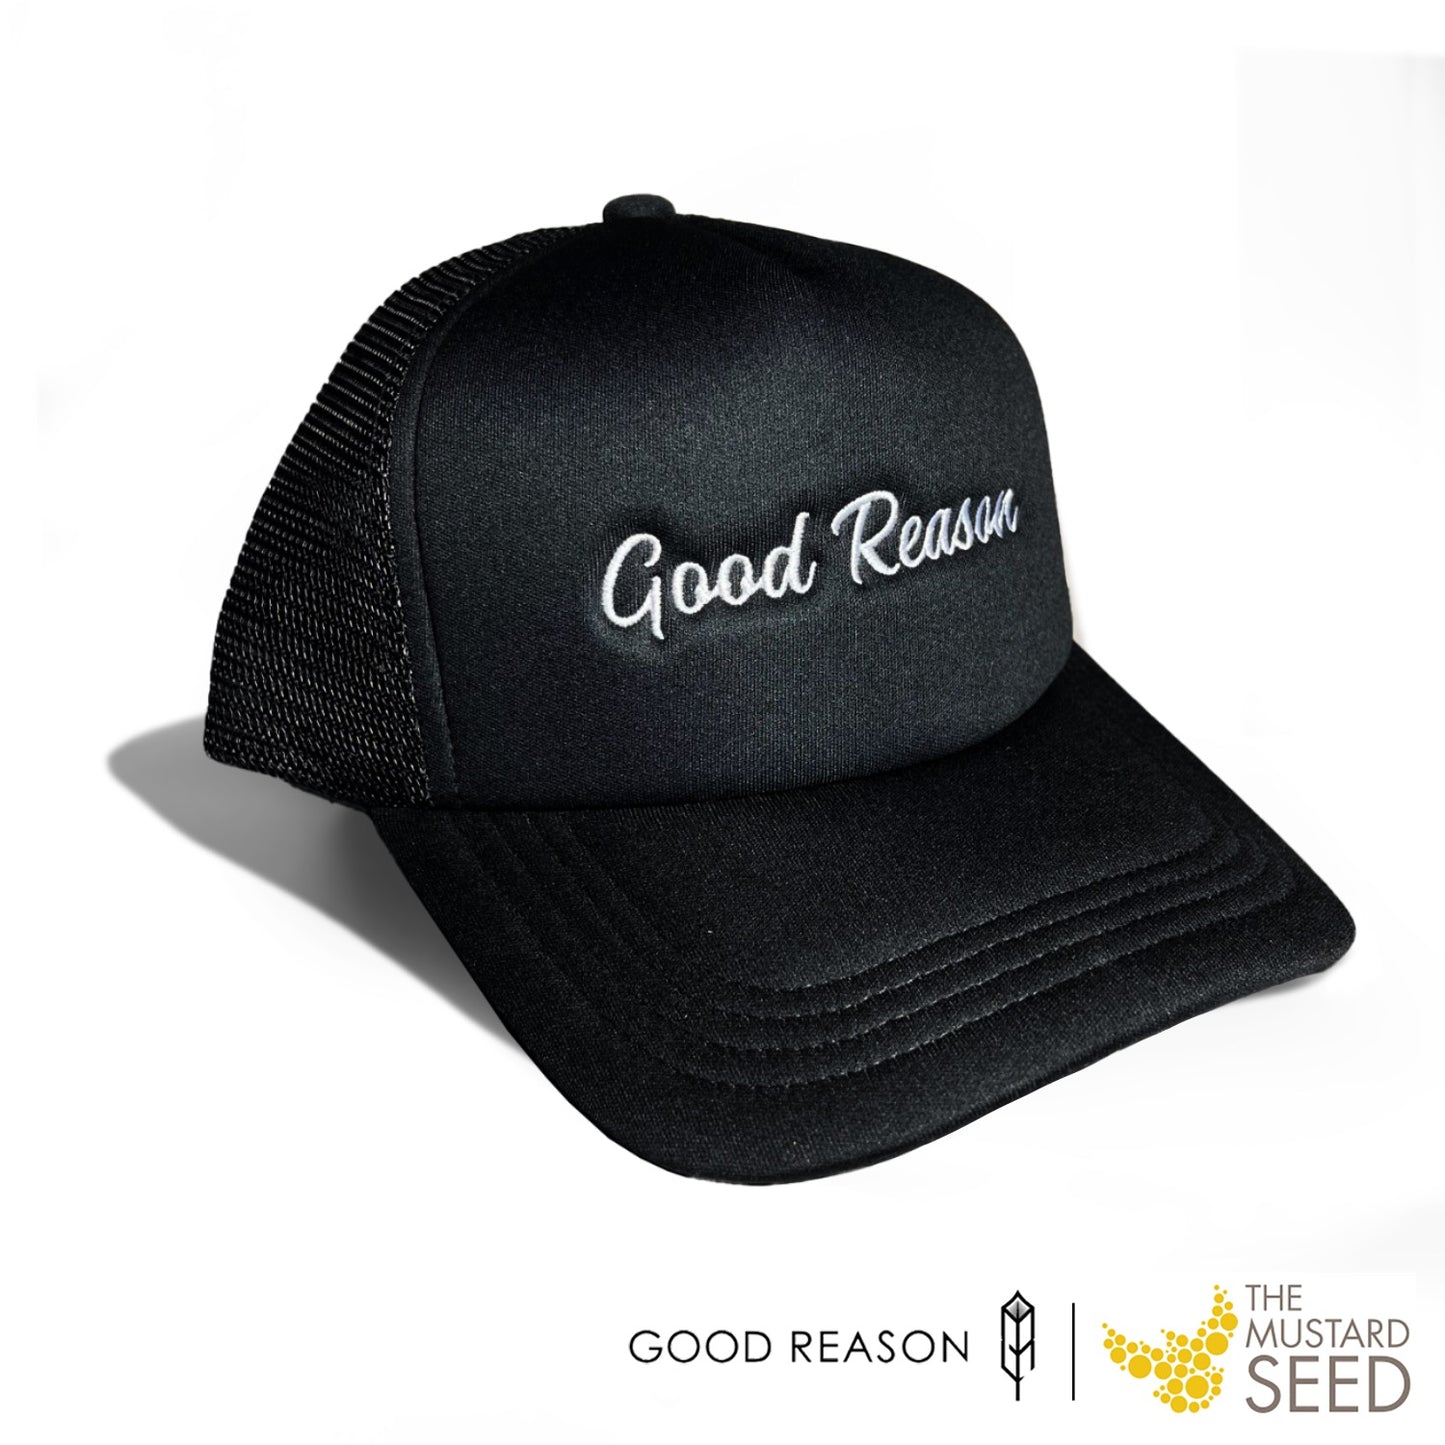 Mustard Seed Trucker Hat Collaboration